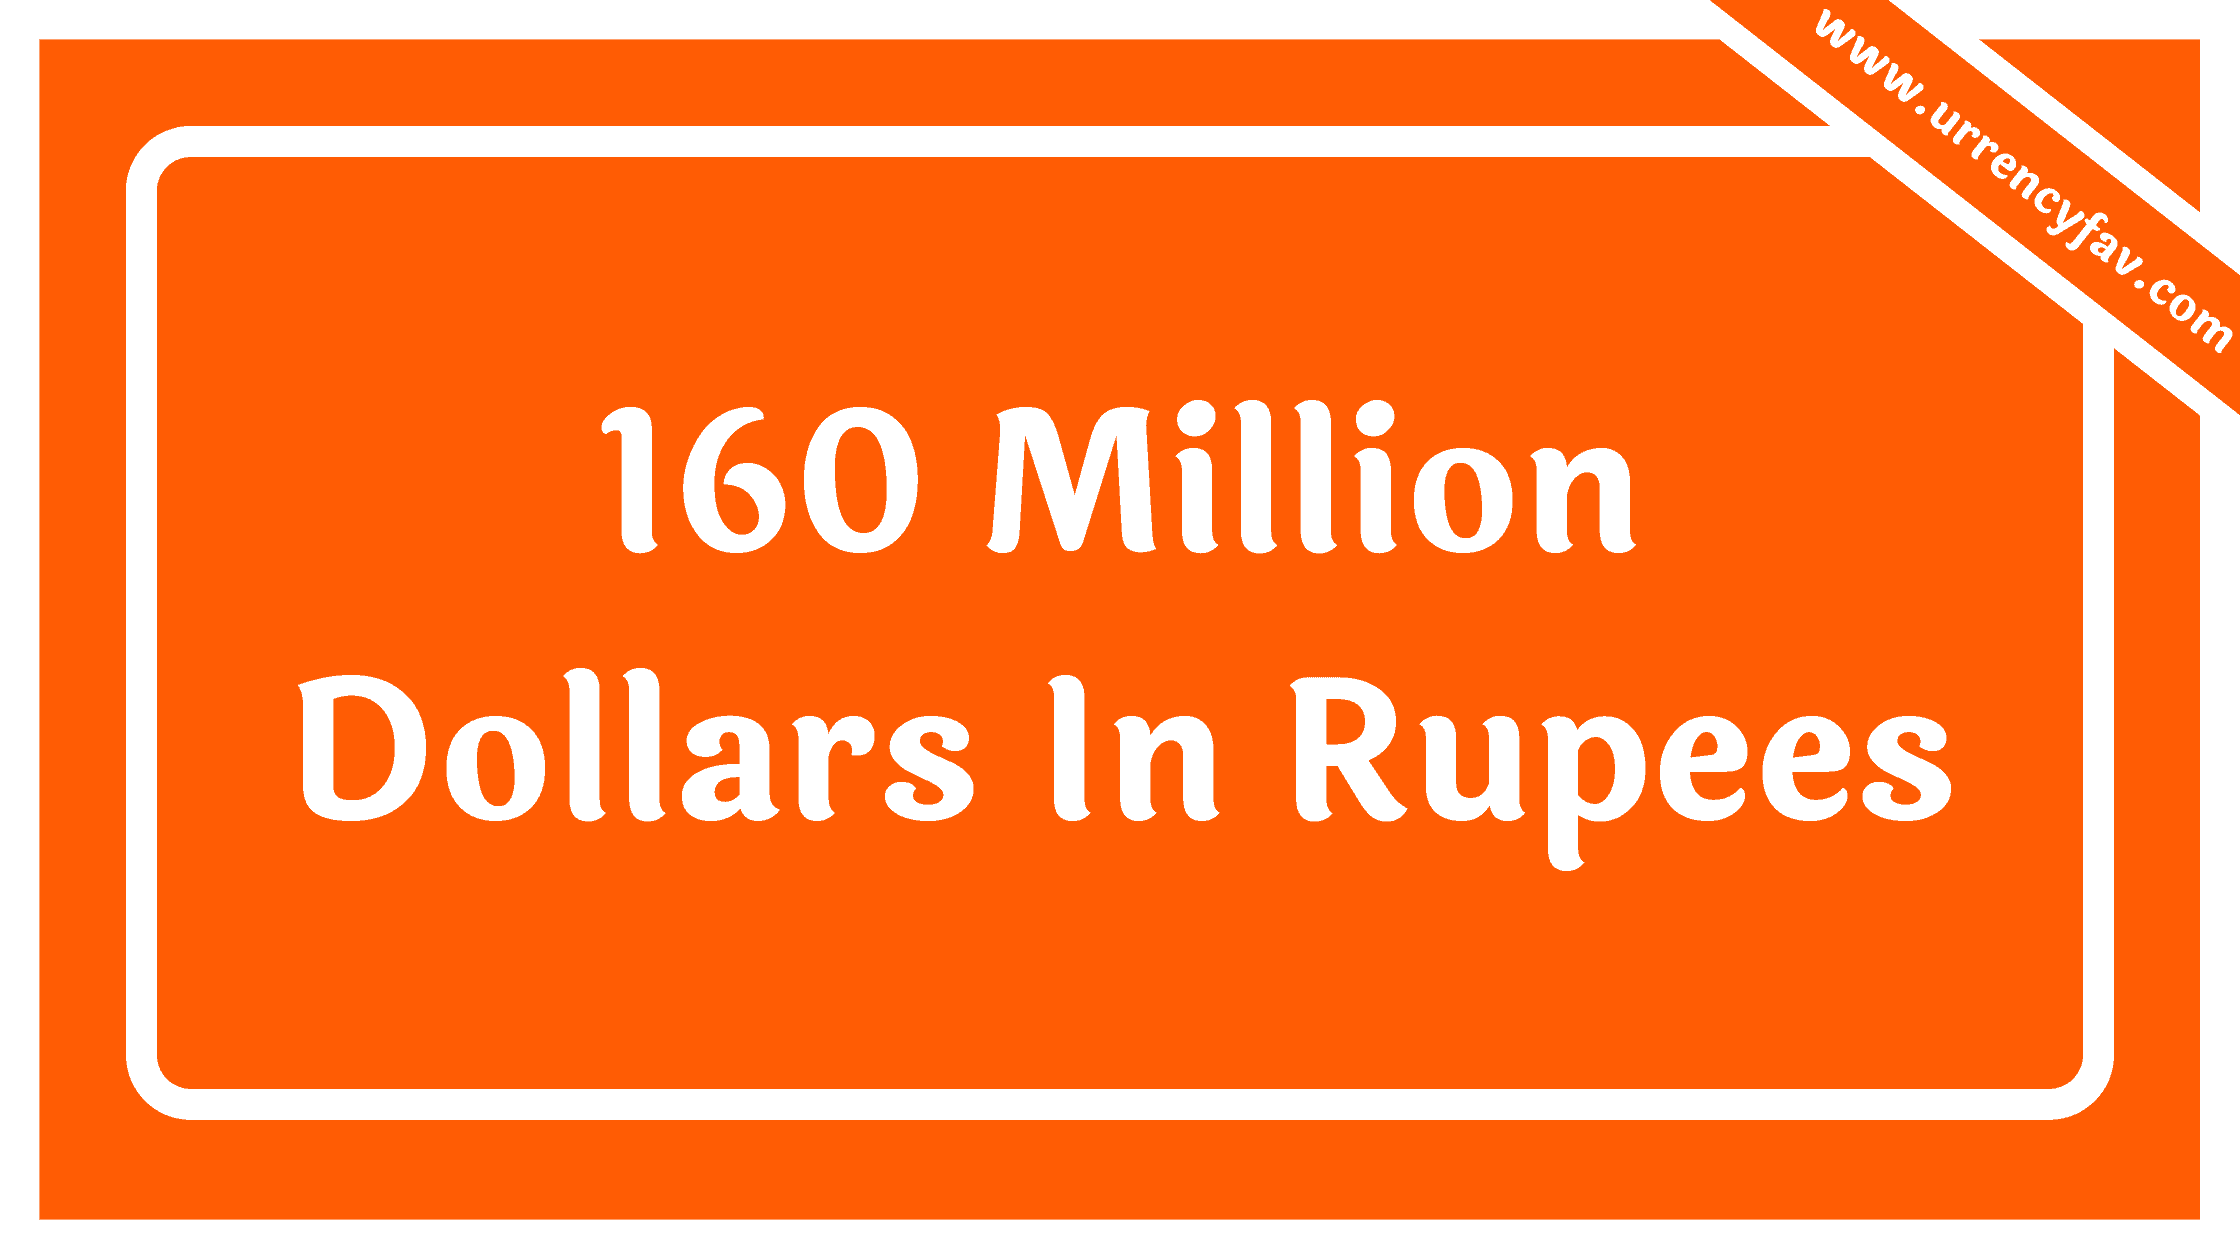 160 Million Dollars In Rupees